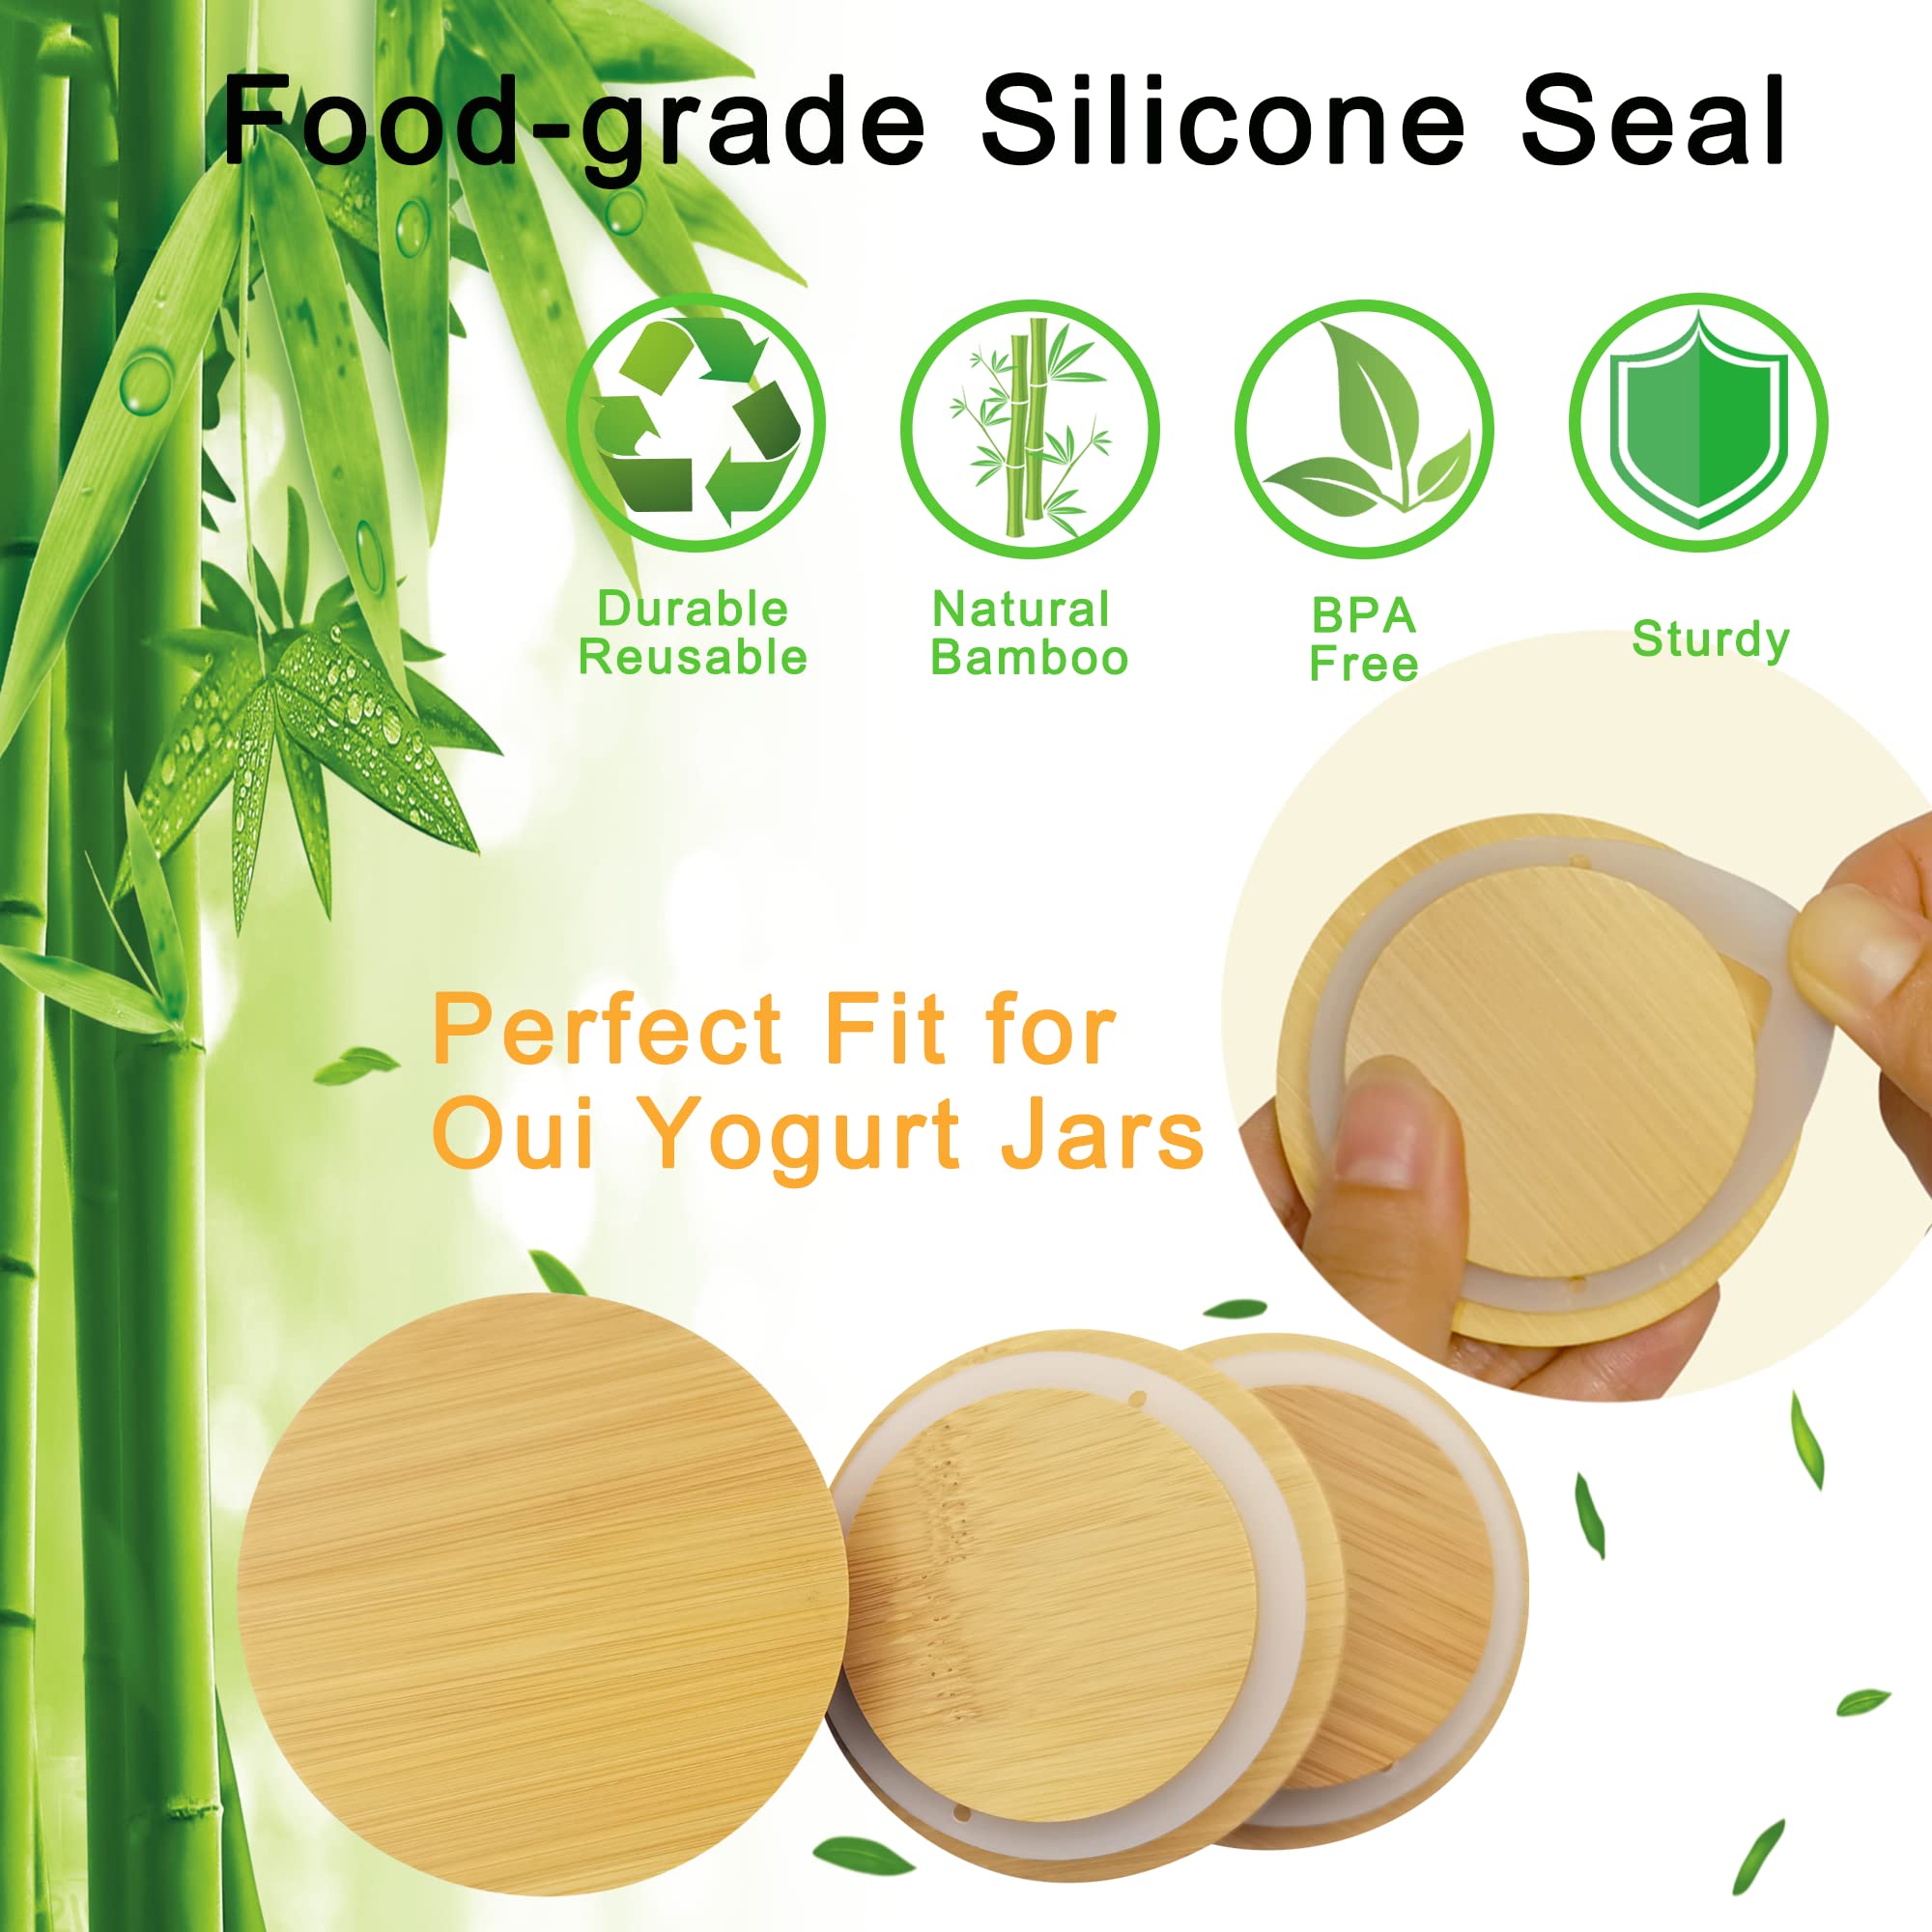 Oui Yogurt Jar Lids - 8 Pack Oui Yogurt Bamboo Jar Lids Set, Reusable Oui Lids Natural Bamboo Lids for Oui Yogurt Jars with Labels & Silicone Sealing Rings, Perfect Sealing